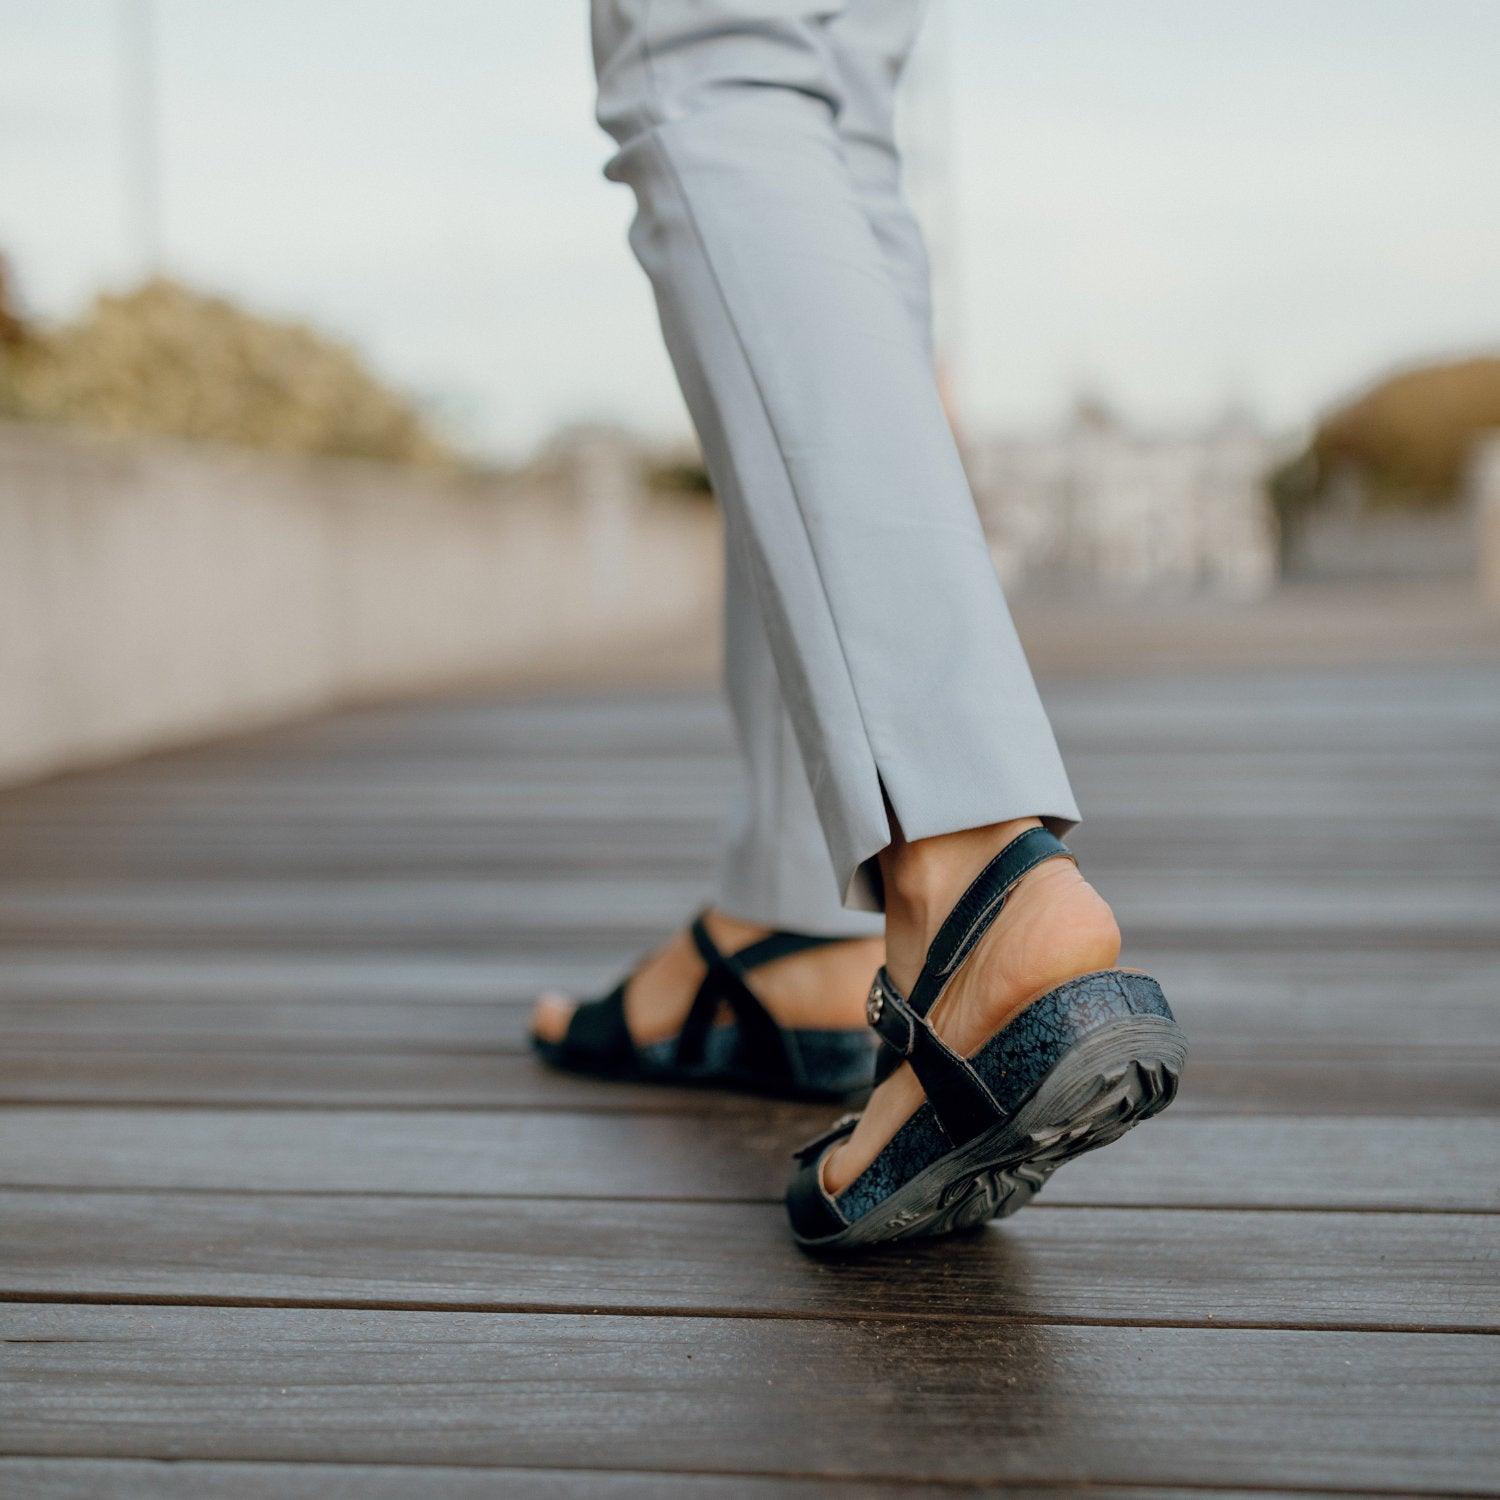 Sandal style FIDSCHI 54 by Romika USA